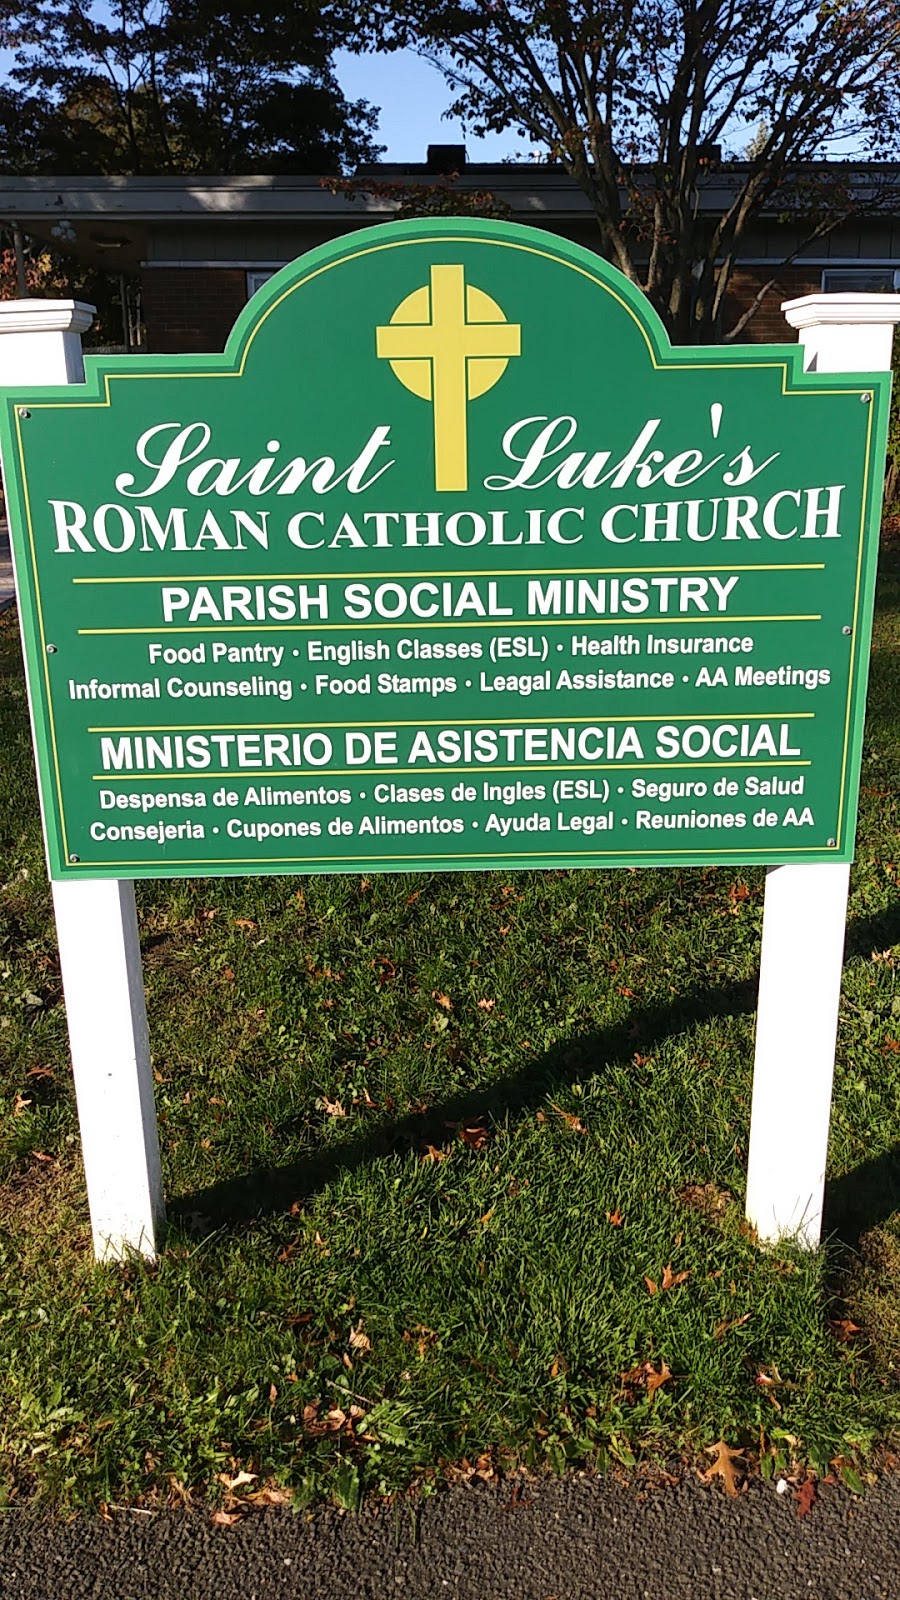 St Lukes Religious Education | 266 Wicks Rd, Brentwood, NY 11717 | Phone: (631) 273-4333